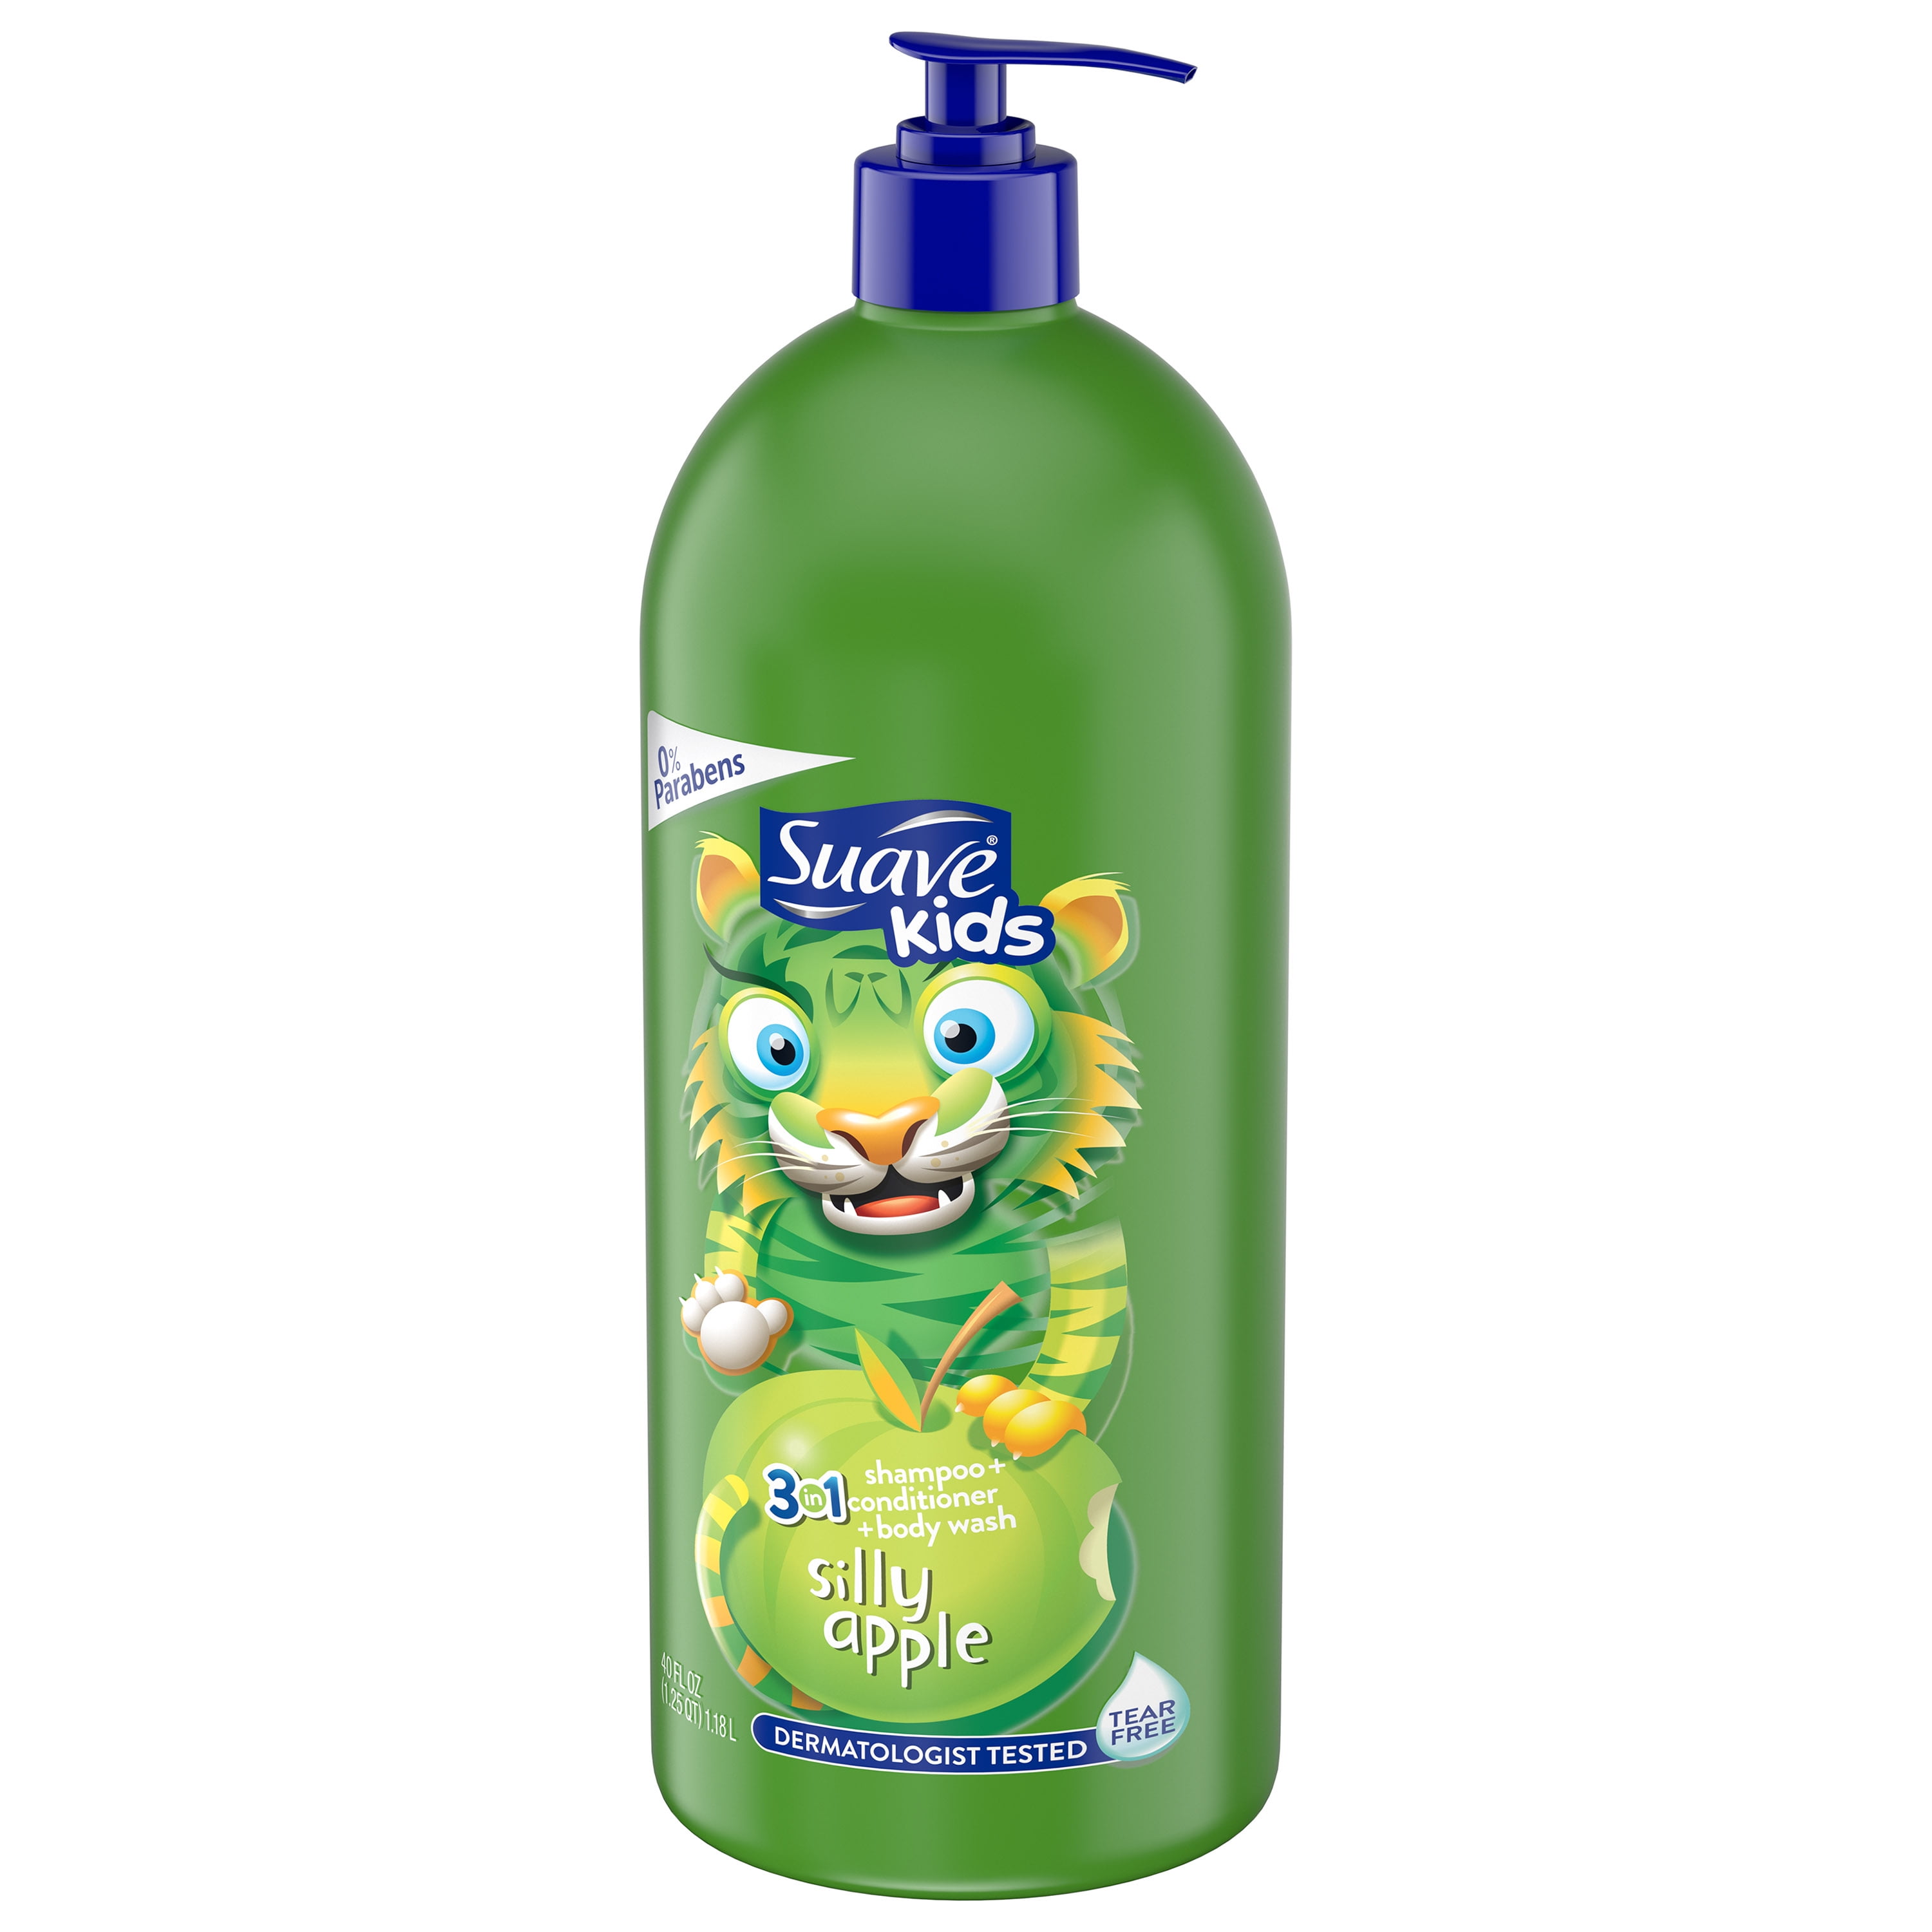 Suave 3-in-1 Shampoo, Conditioner, Bodywash, Silly Apple Refreshing,  Tear-Free formula for All Hair Types, 40 oz 